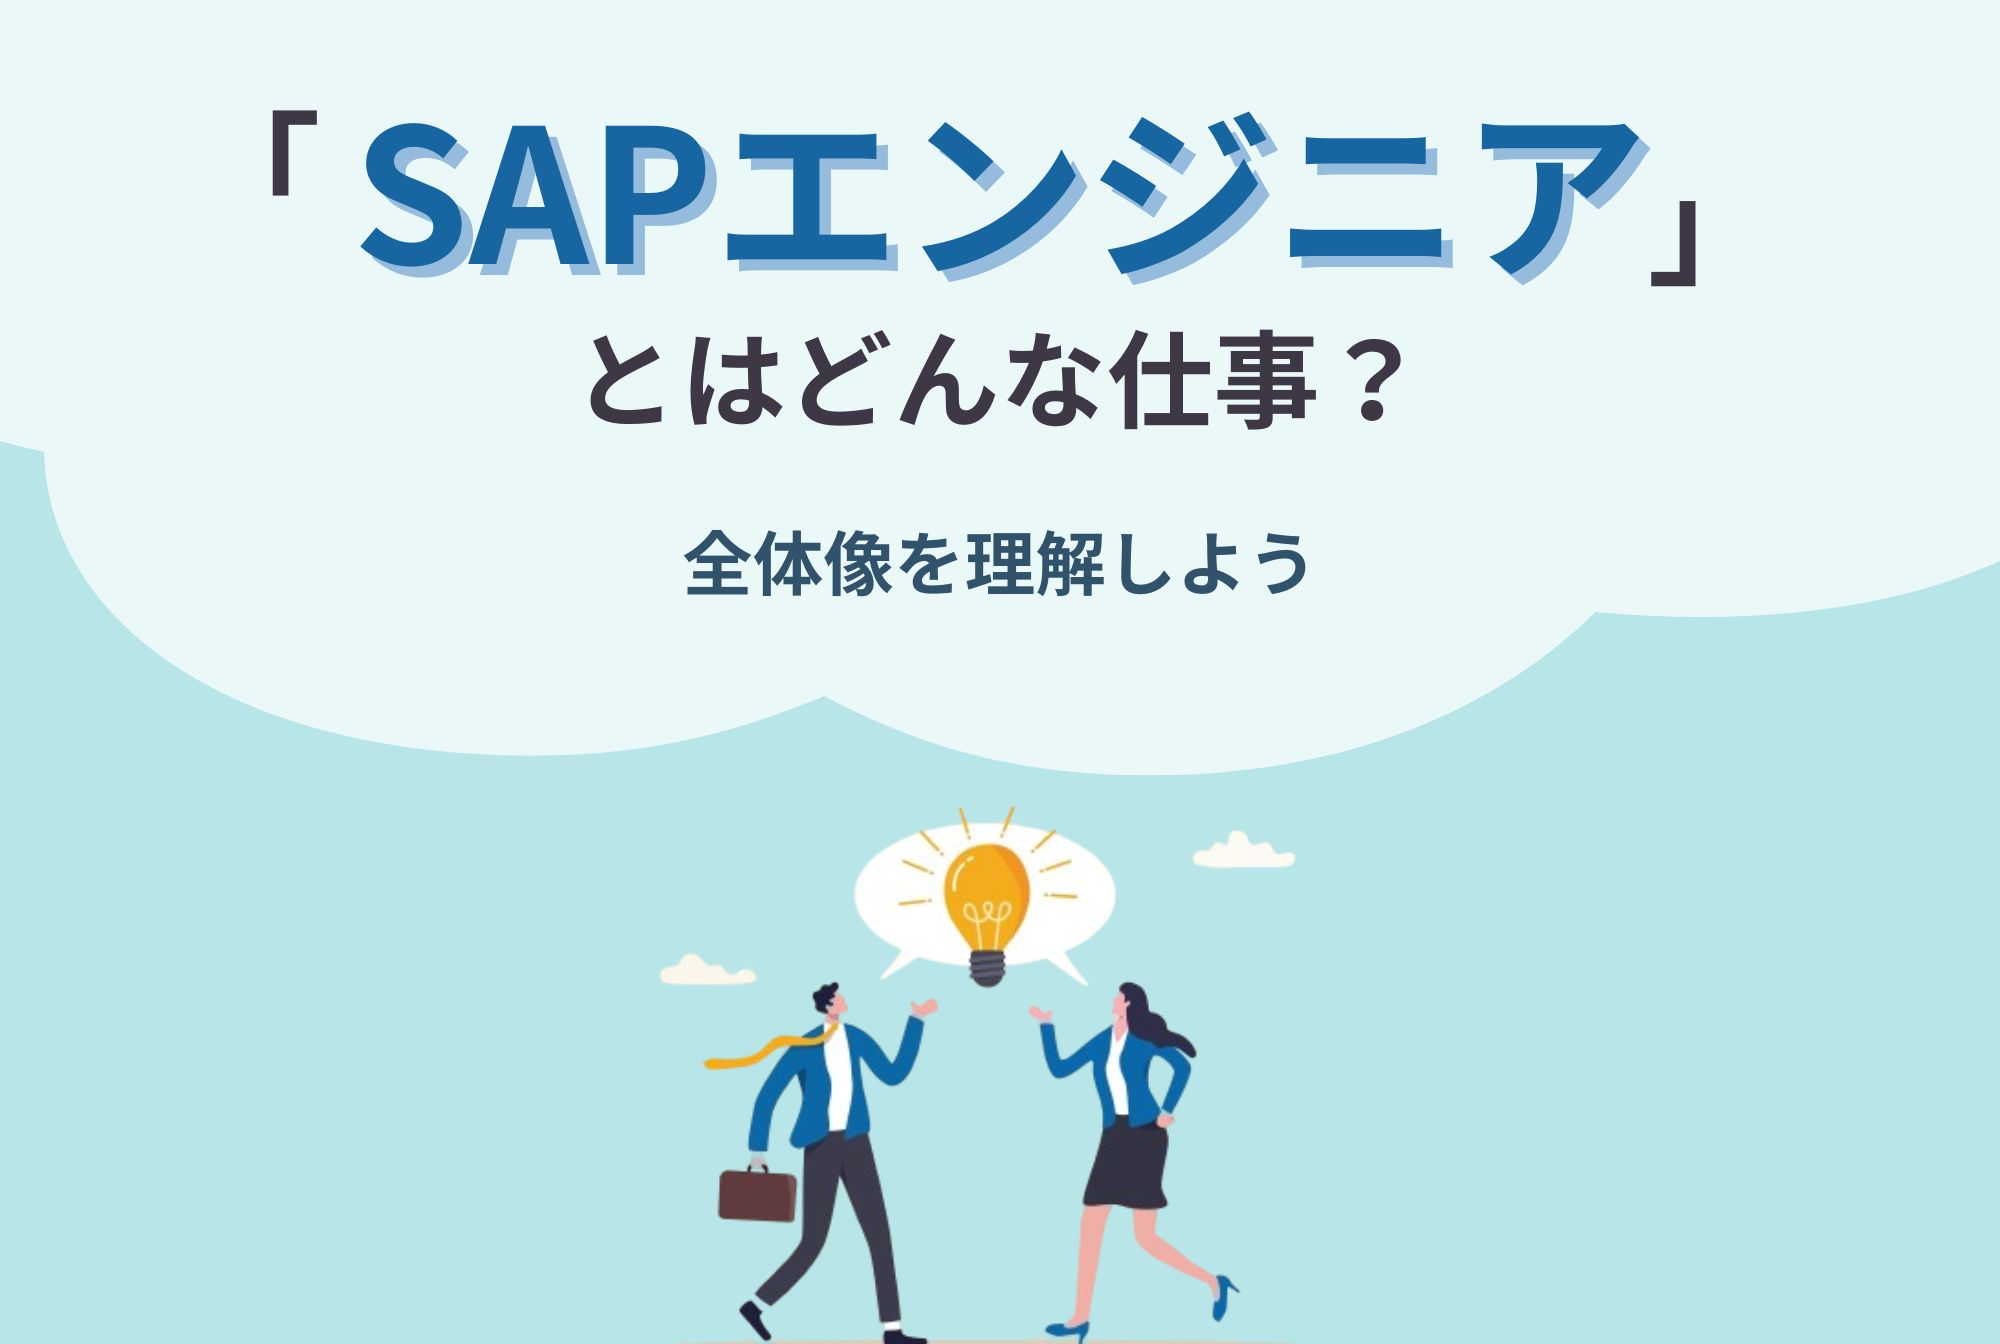 「SAPエンジニア」とはどんな仕事？全体像を理解しよう